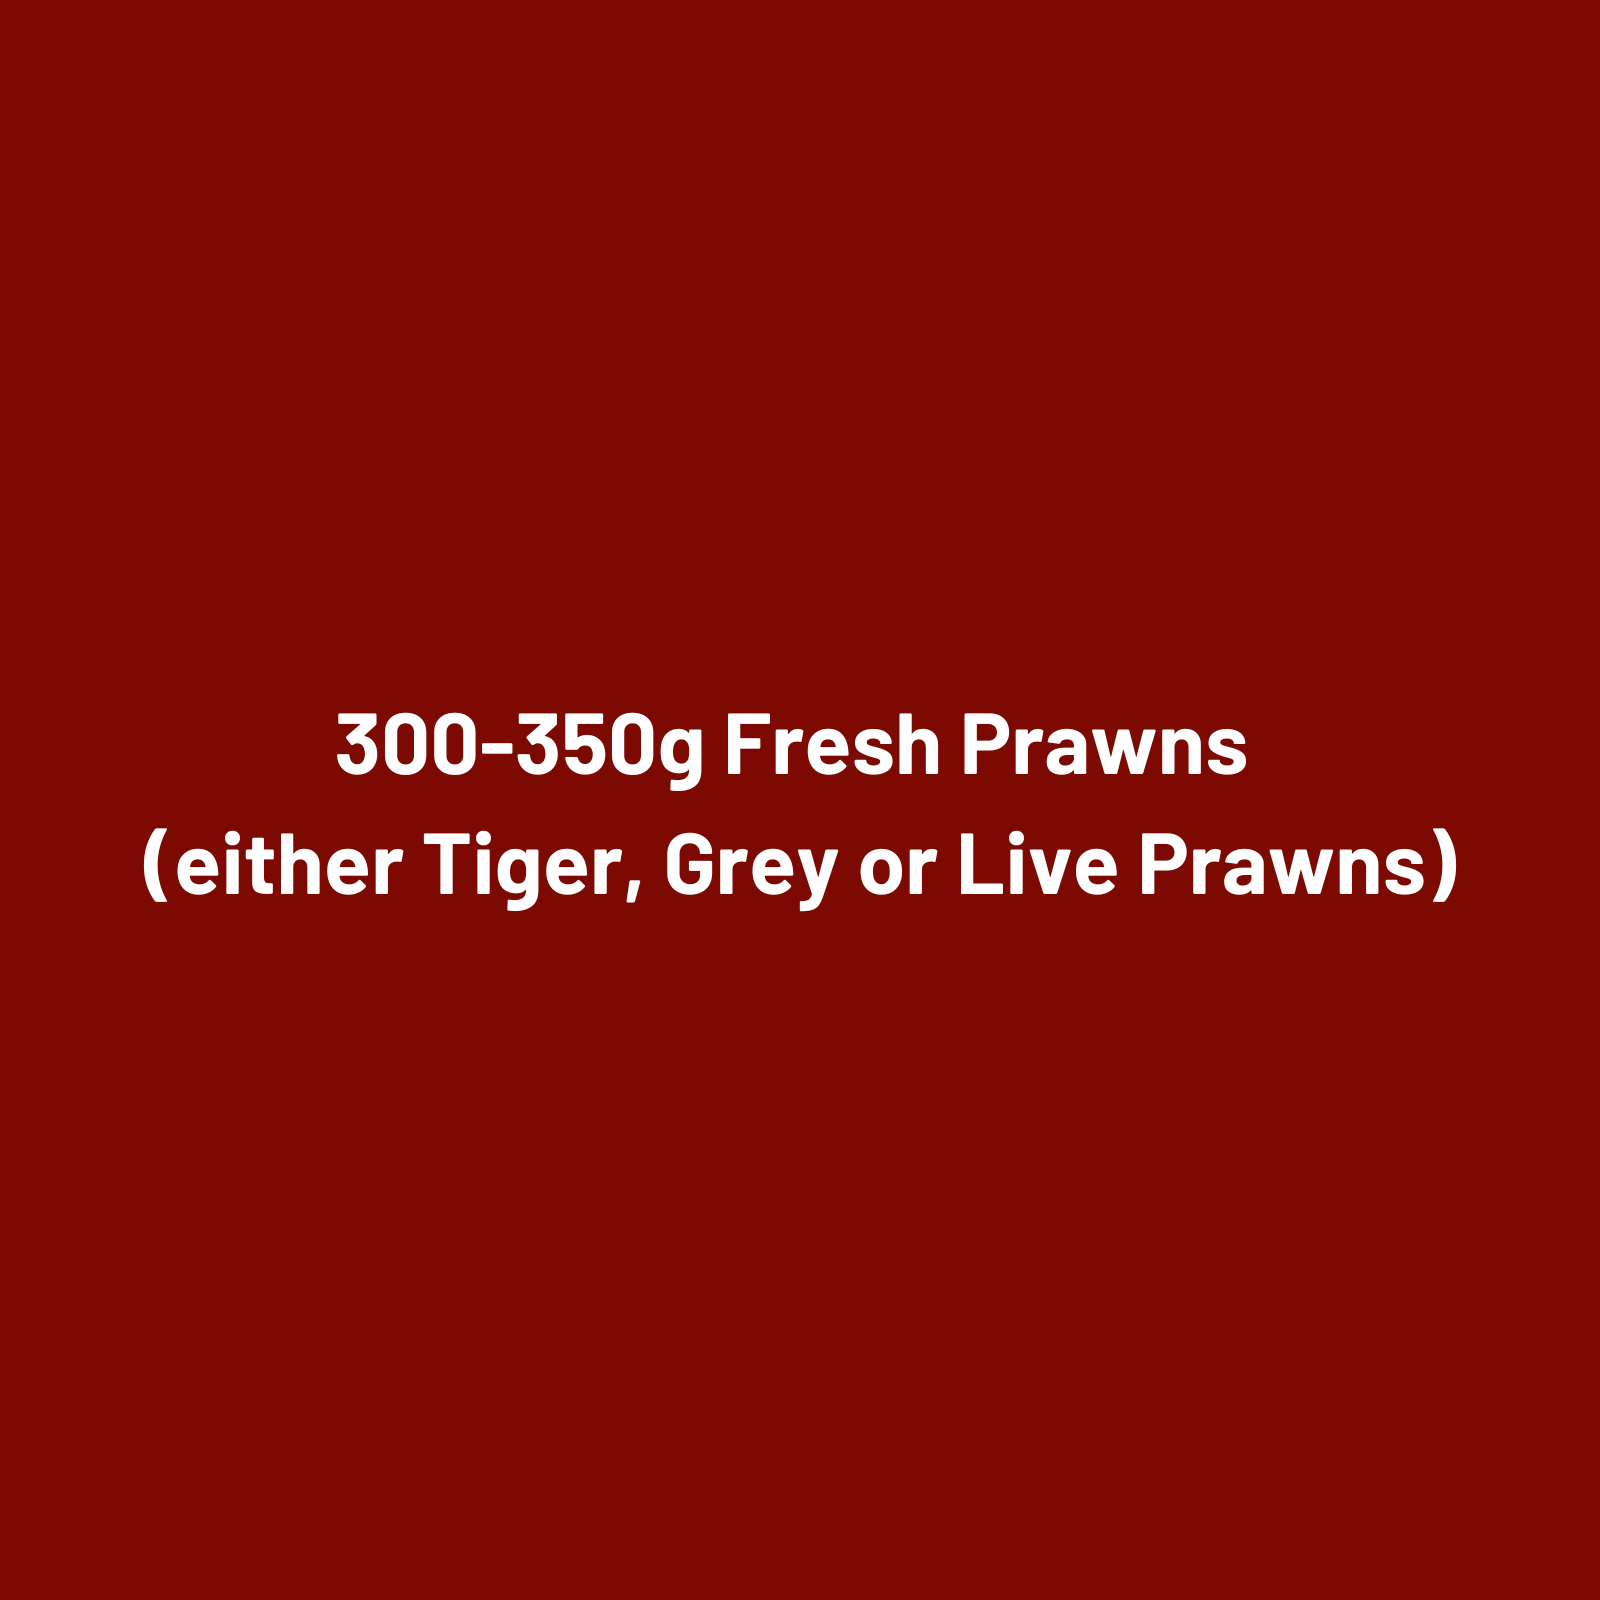 300-350g Fresh Prawns [Minimum Spending of $75]